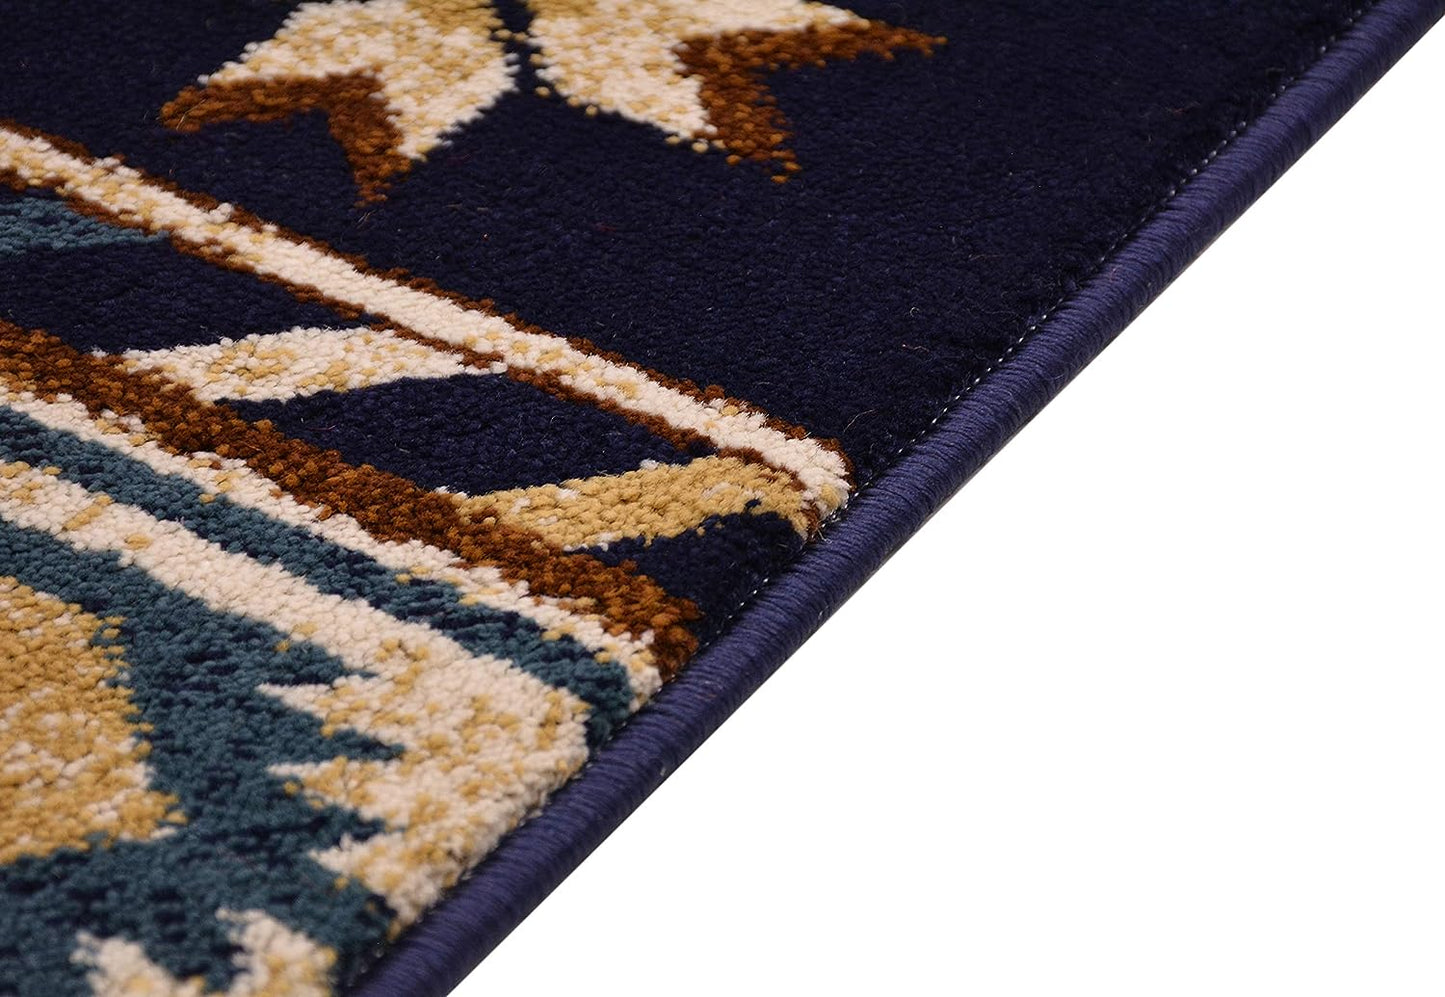 Nevita Collection Southwestern Native American Design Rug Geometric (Navy Blue, 3 x 3)